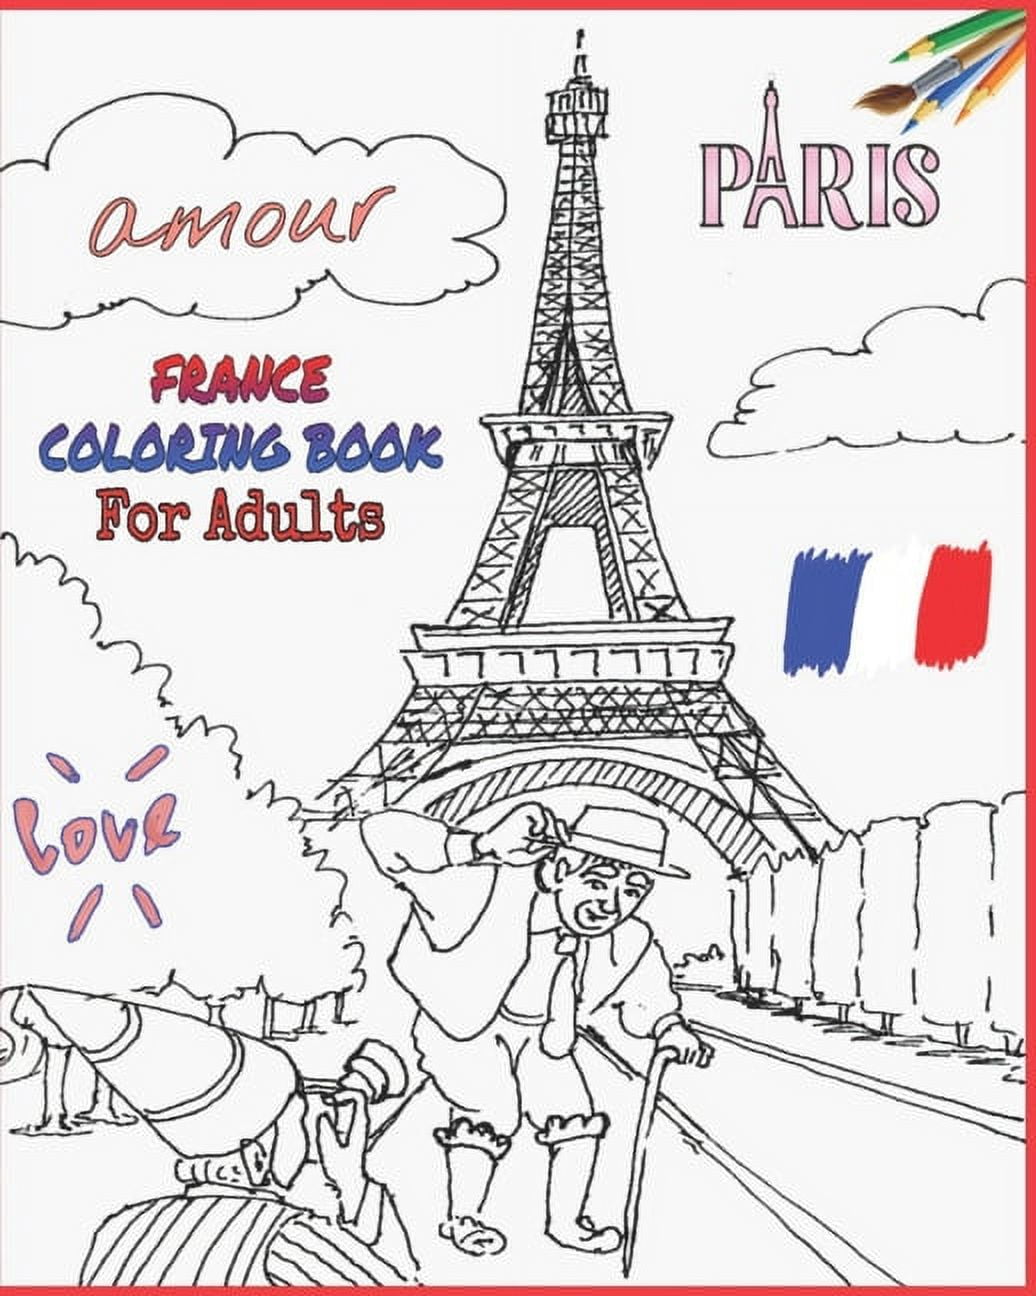 France coloring book for adults paris chateau de versailles eiffel tower napoleon bonaparte notre dame queen of france the louvre and more to color paperback